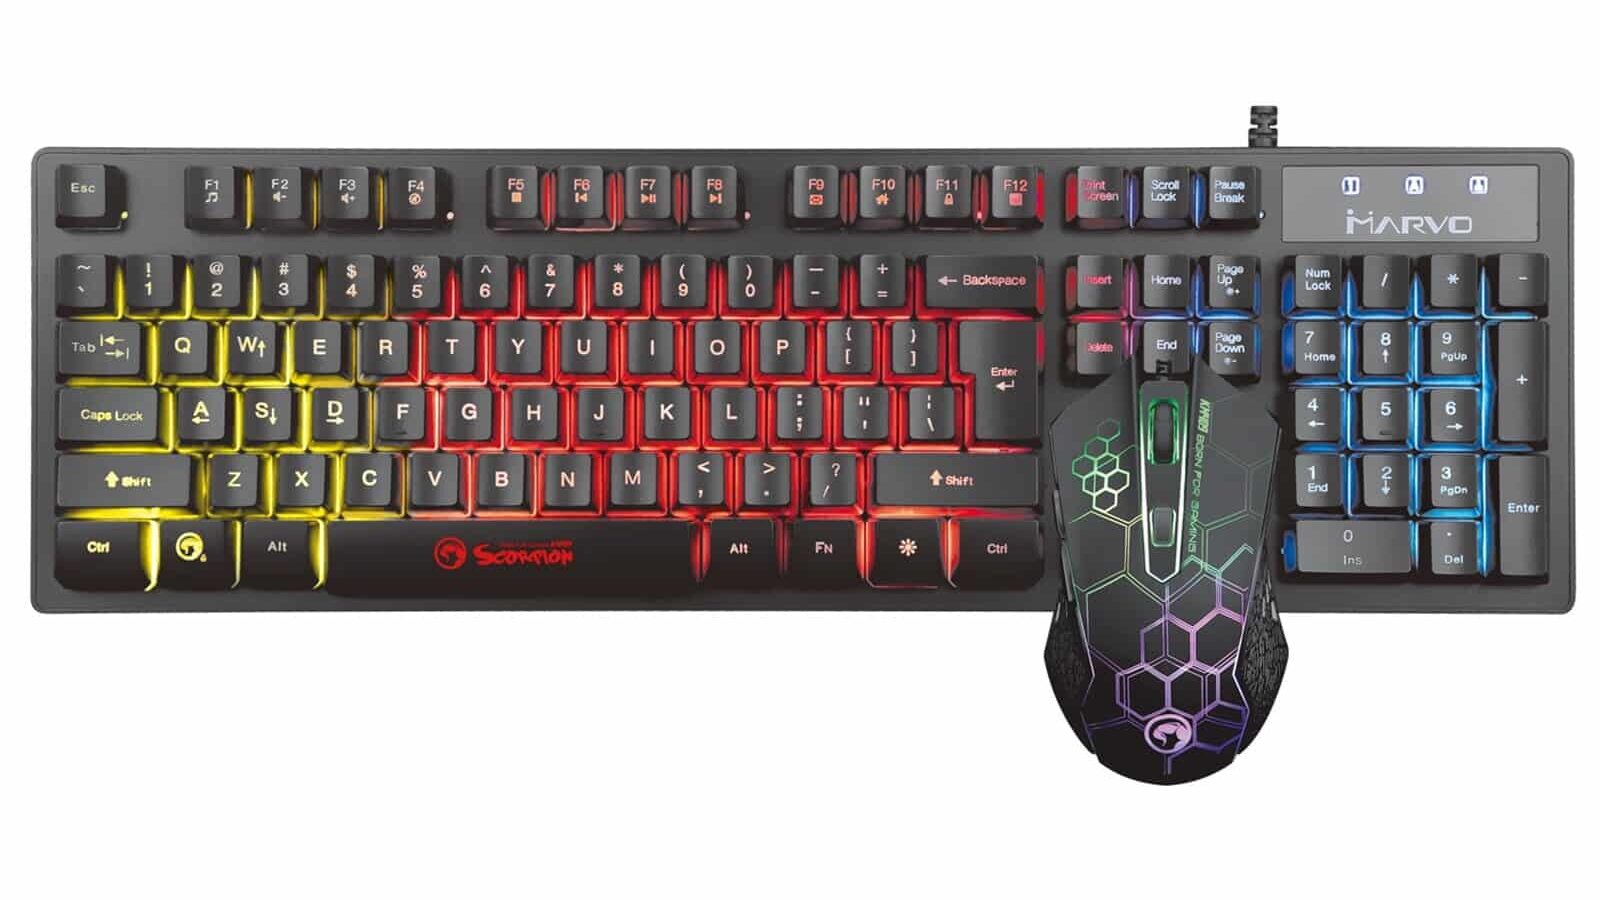 Marvo Scorpion KM409 Gaming Keyboard and Mouse Bundle